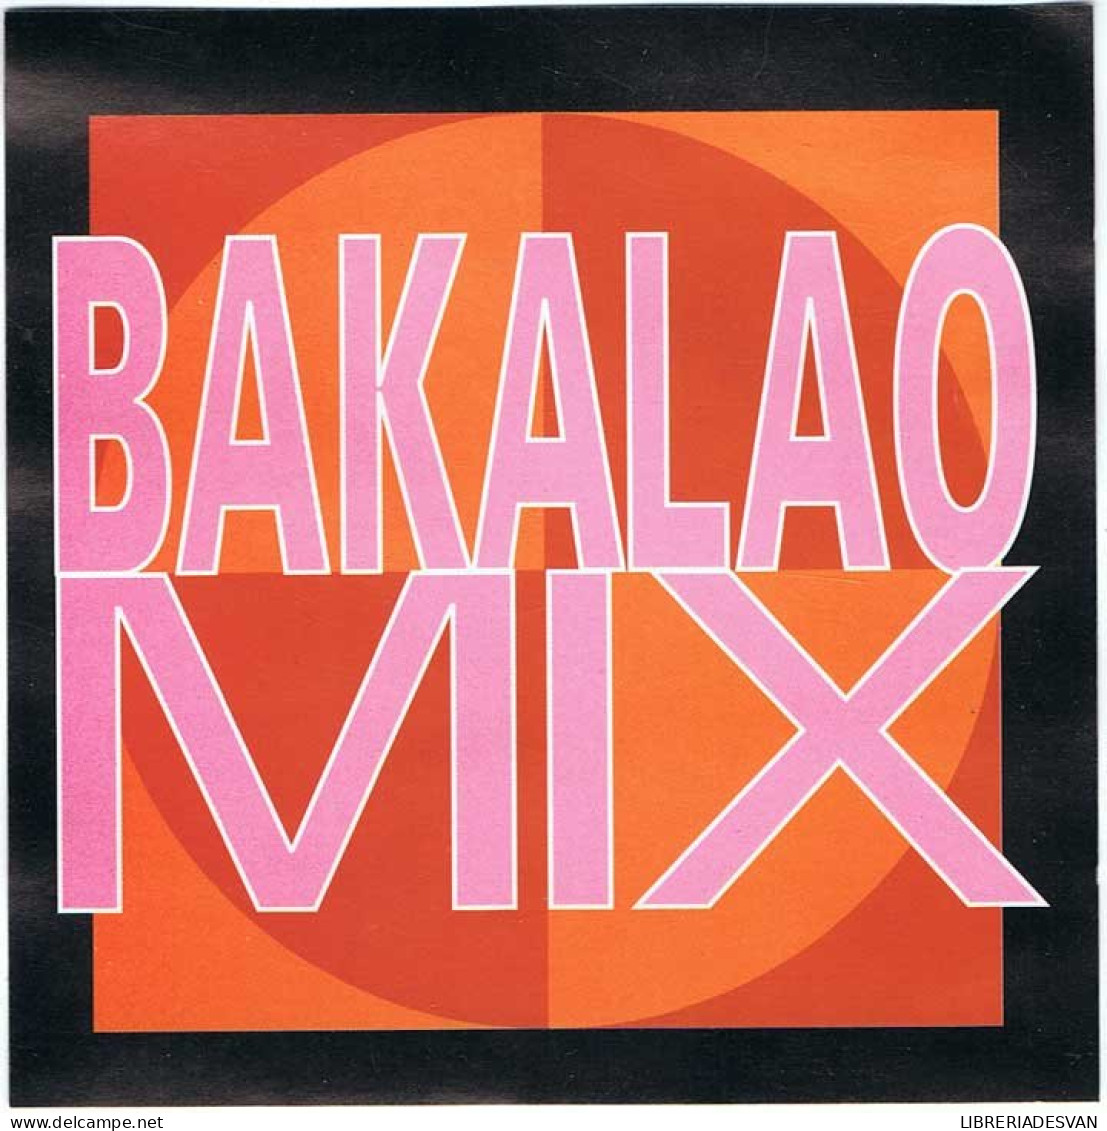 Bakalao Mix. CD - Dance, Techno En House